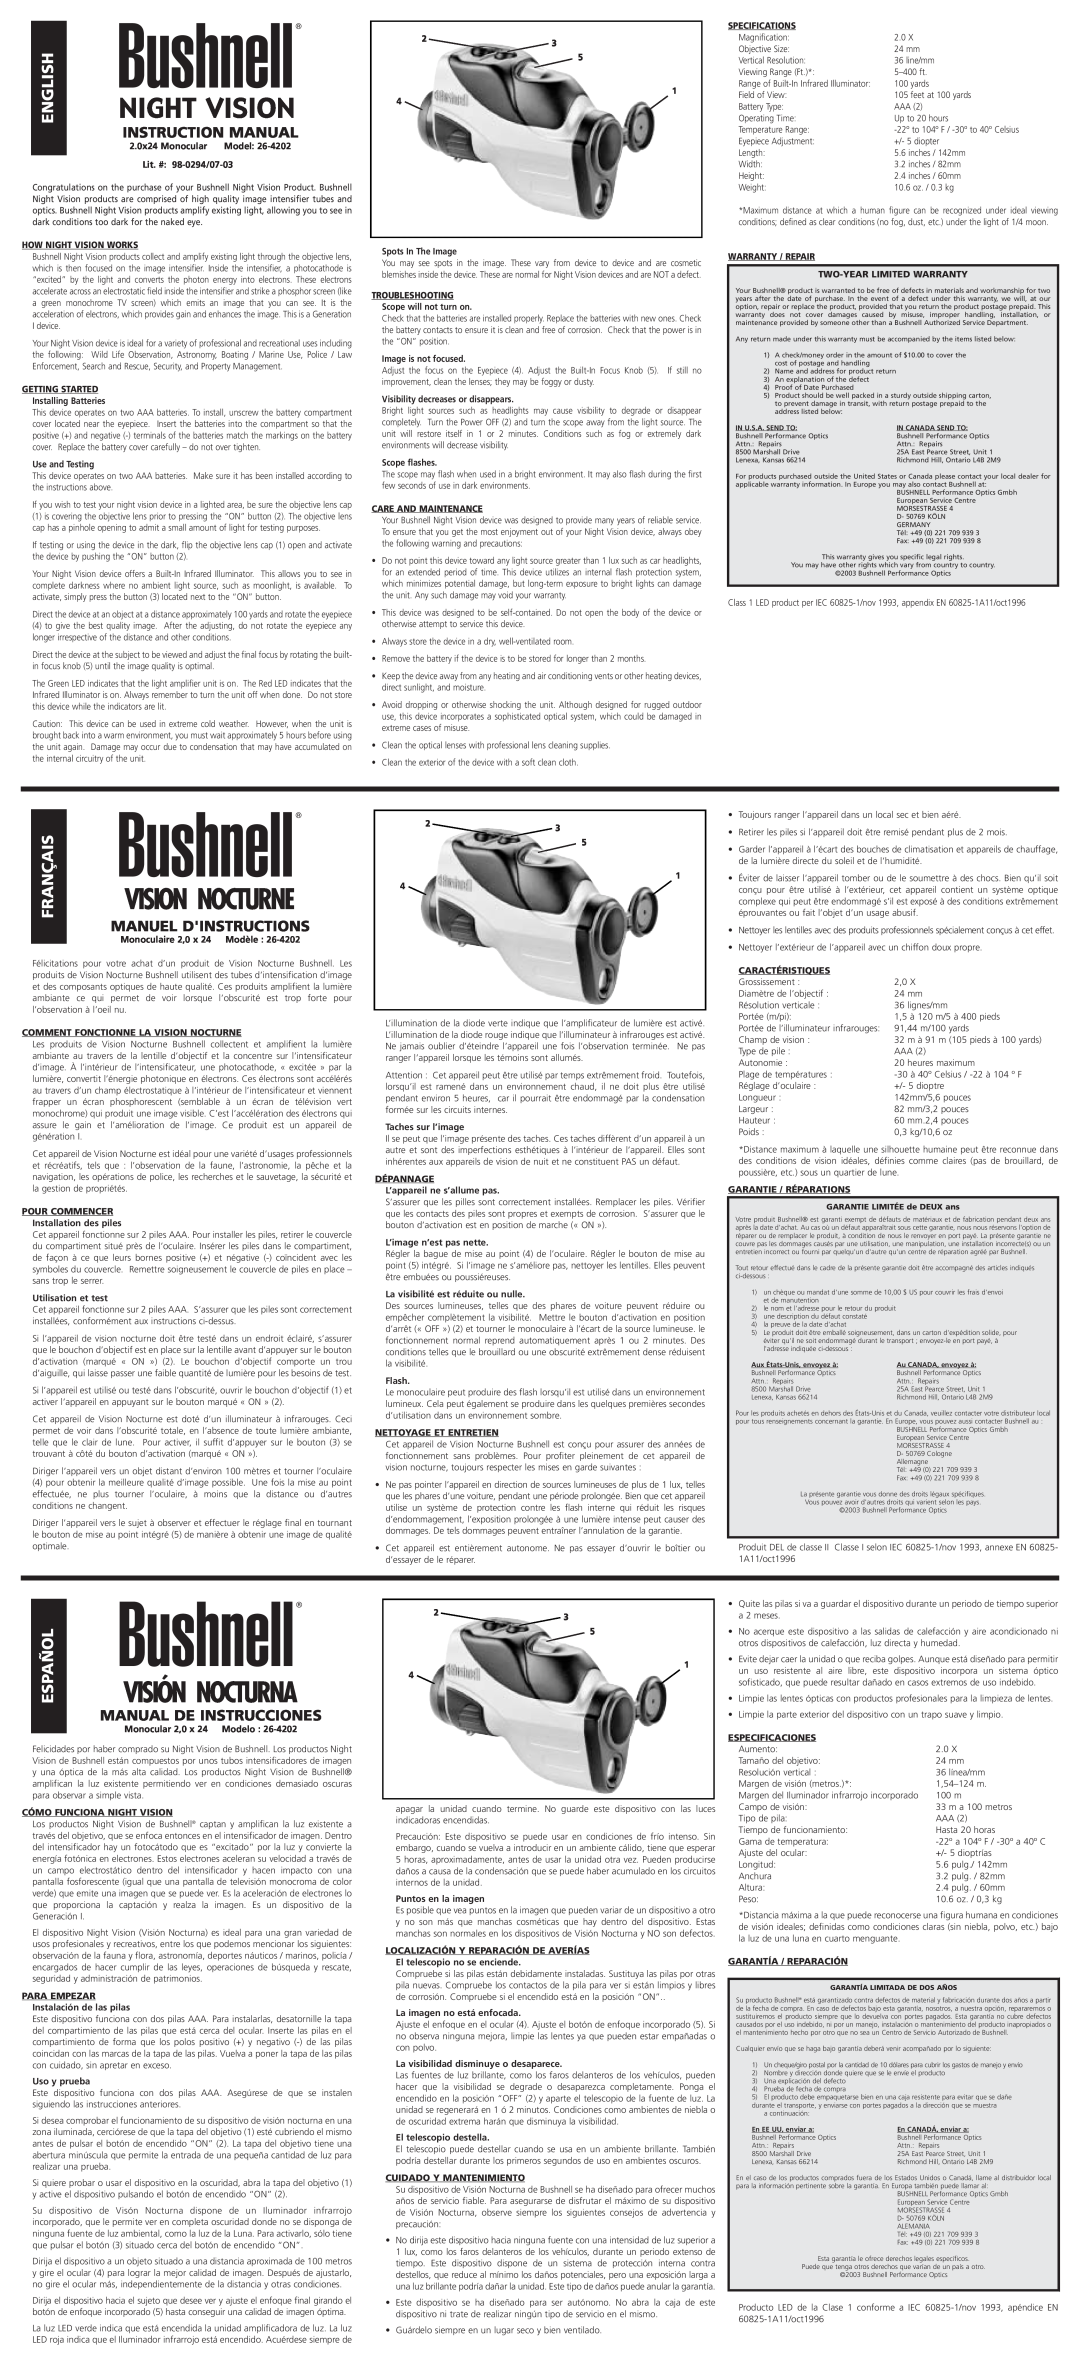 Bushnell 26-4202 instruction manual Vision Nocturne, English, Français, Español, Instruction Manual, Manuel Dinstructions 